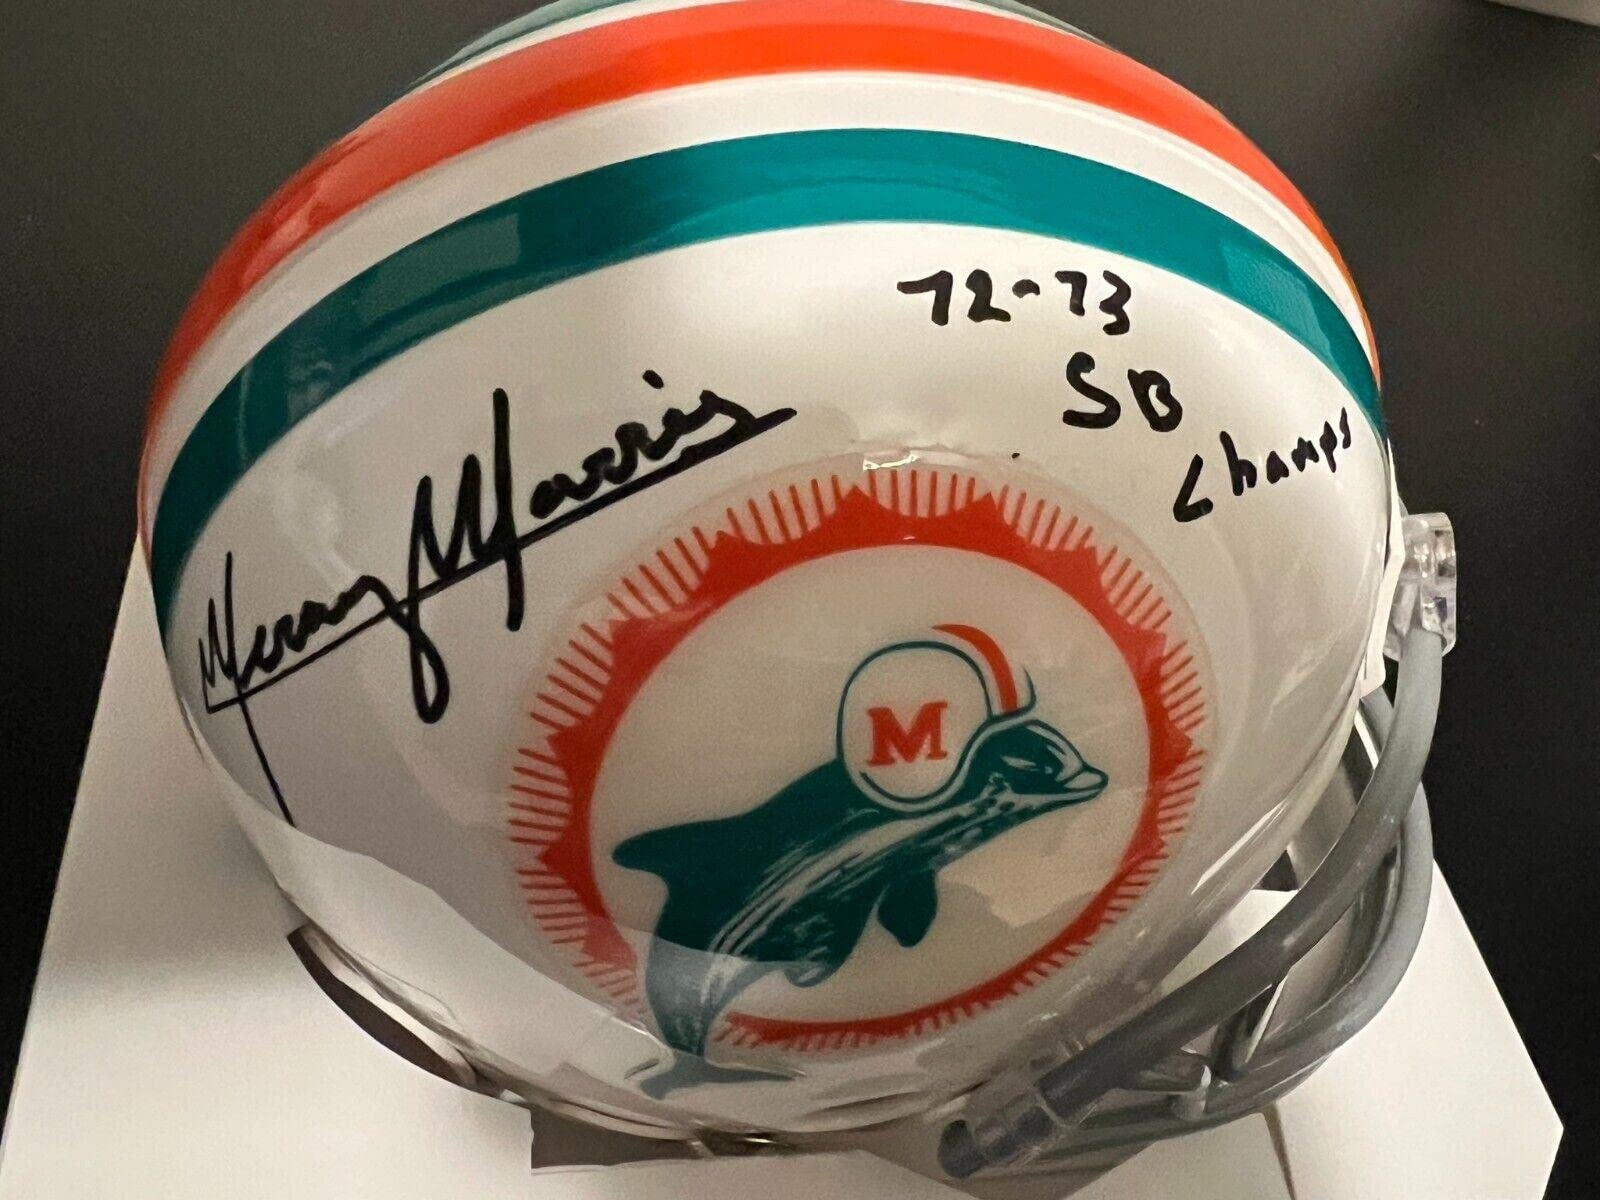 Mercury Morris Miami Dolphins 72,73 Sb Champs Signed Riddell Mini Helmet - Autographed NFL Mini Helmets